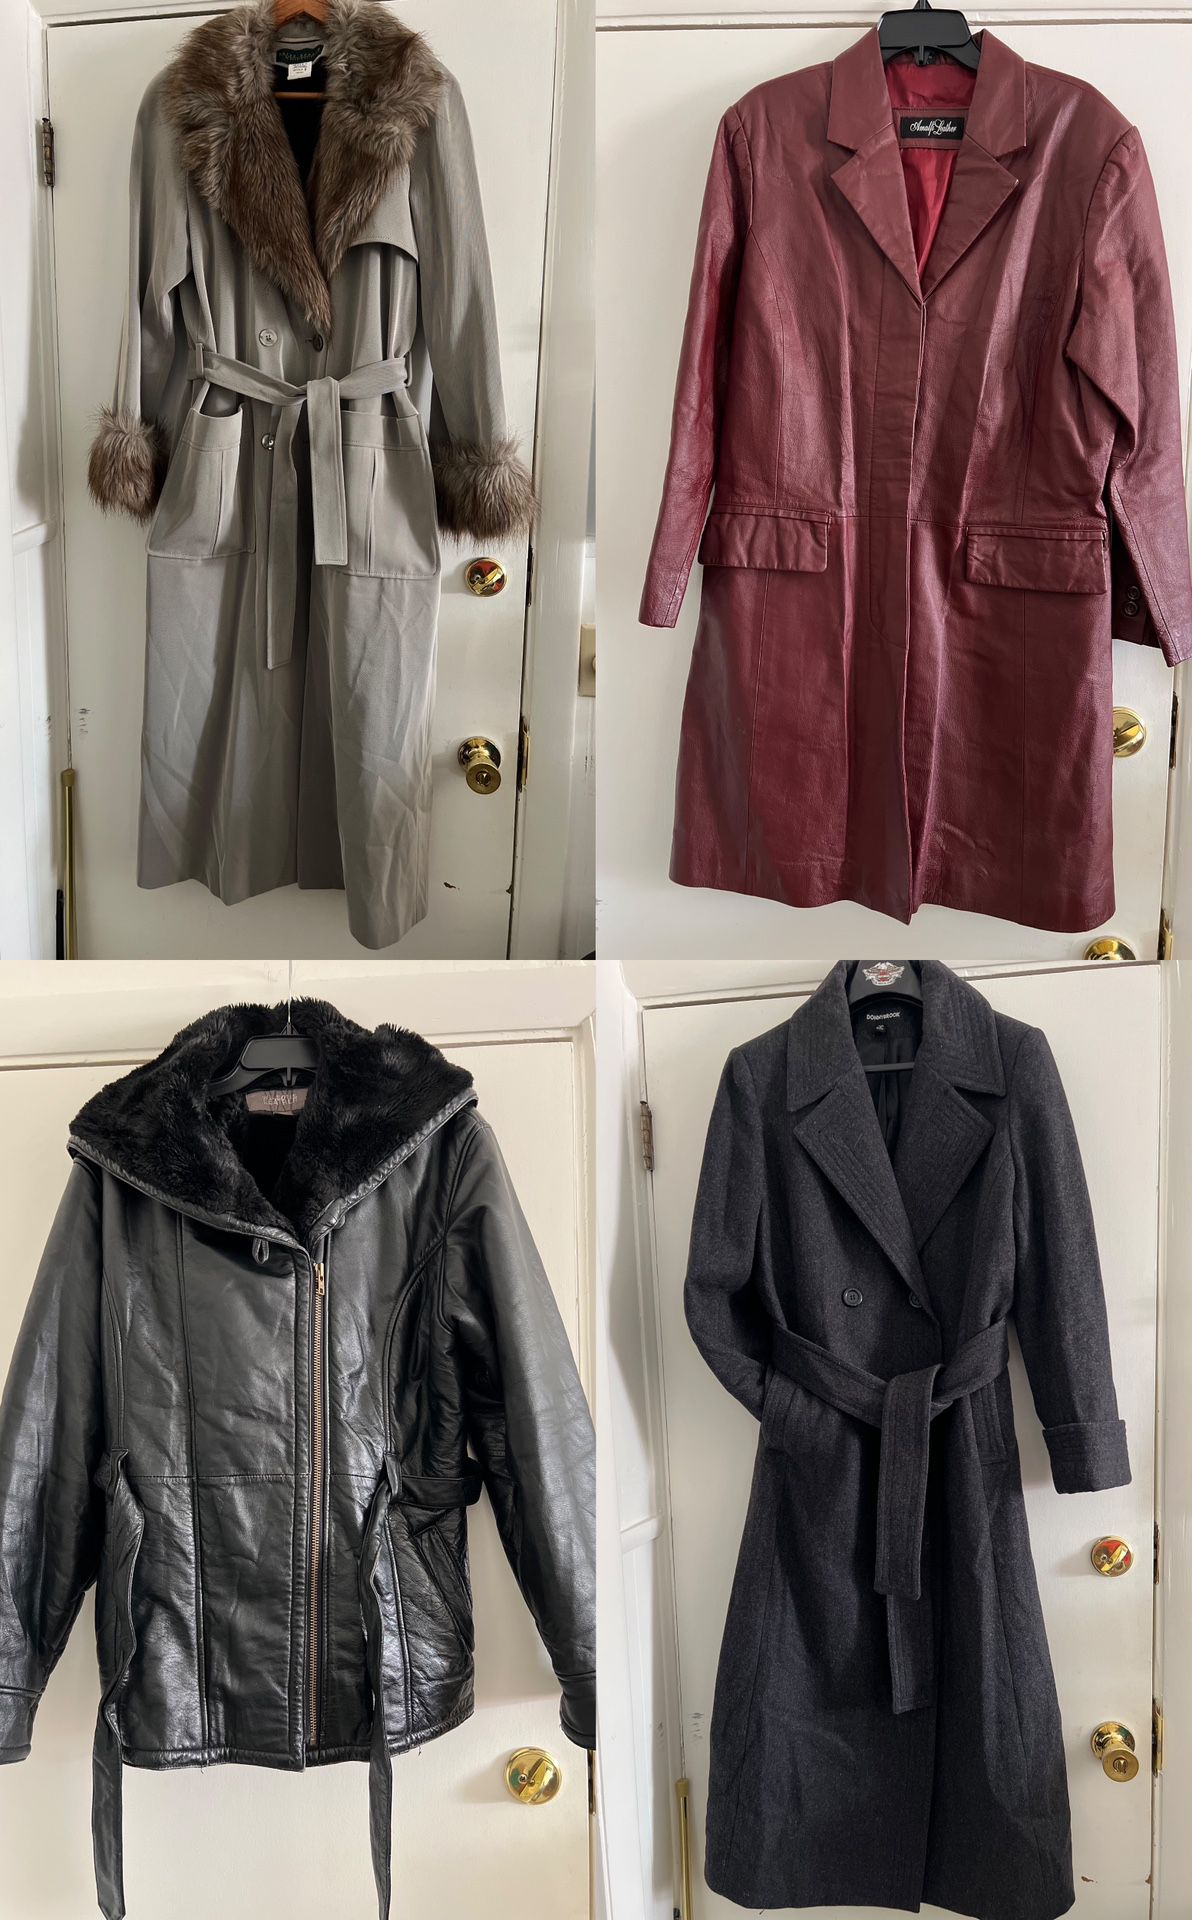 Gray Wool Coat, Black Leather Coat, Burgundy Leather Coat, Harve Benard Trench Coat (See Prices Below)